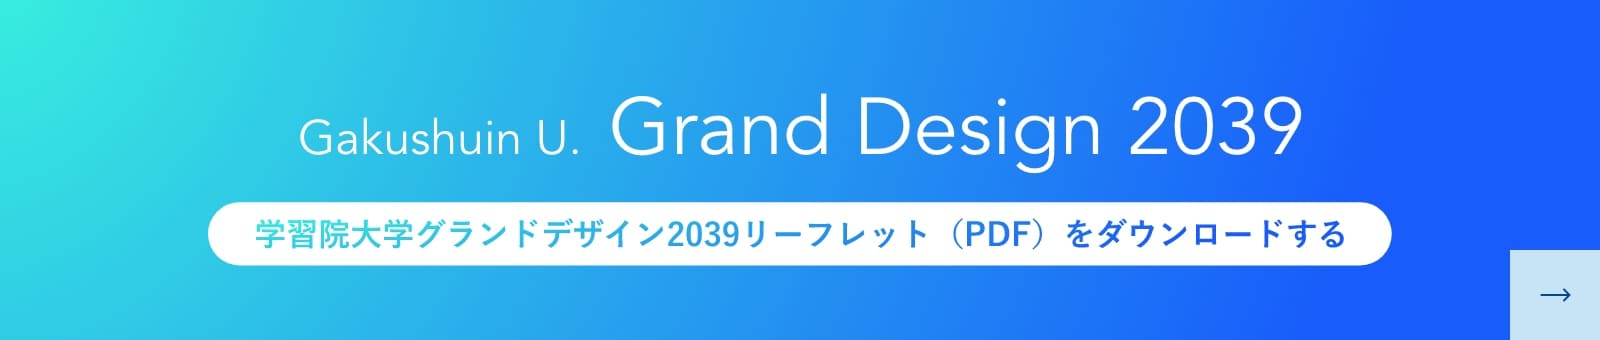 Gakushuin U. Grand Design 2039 学習院大学 未来への新たな設計図